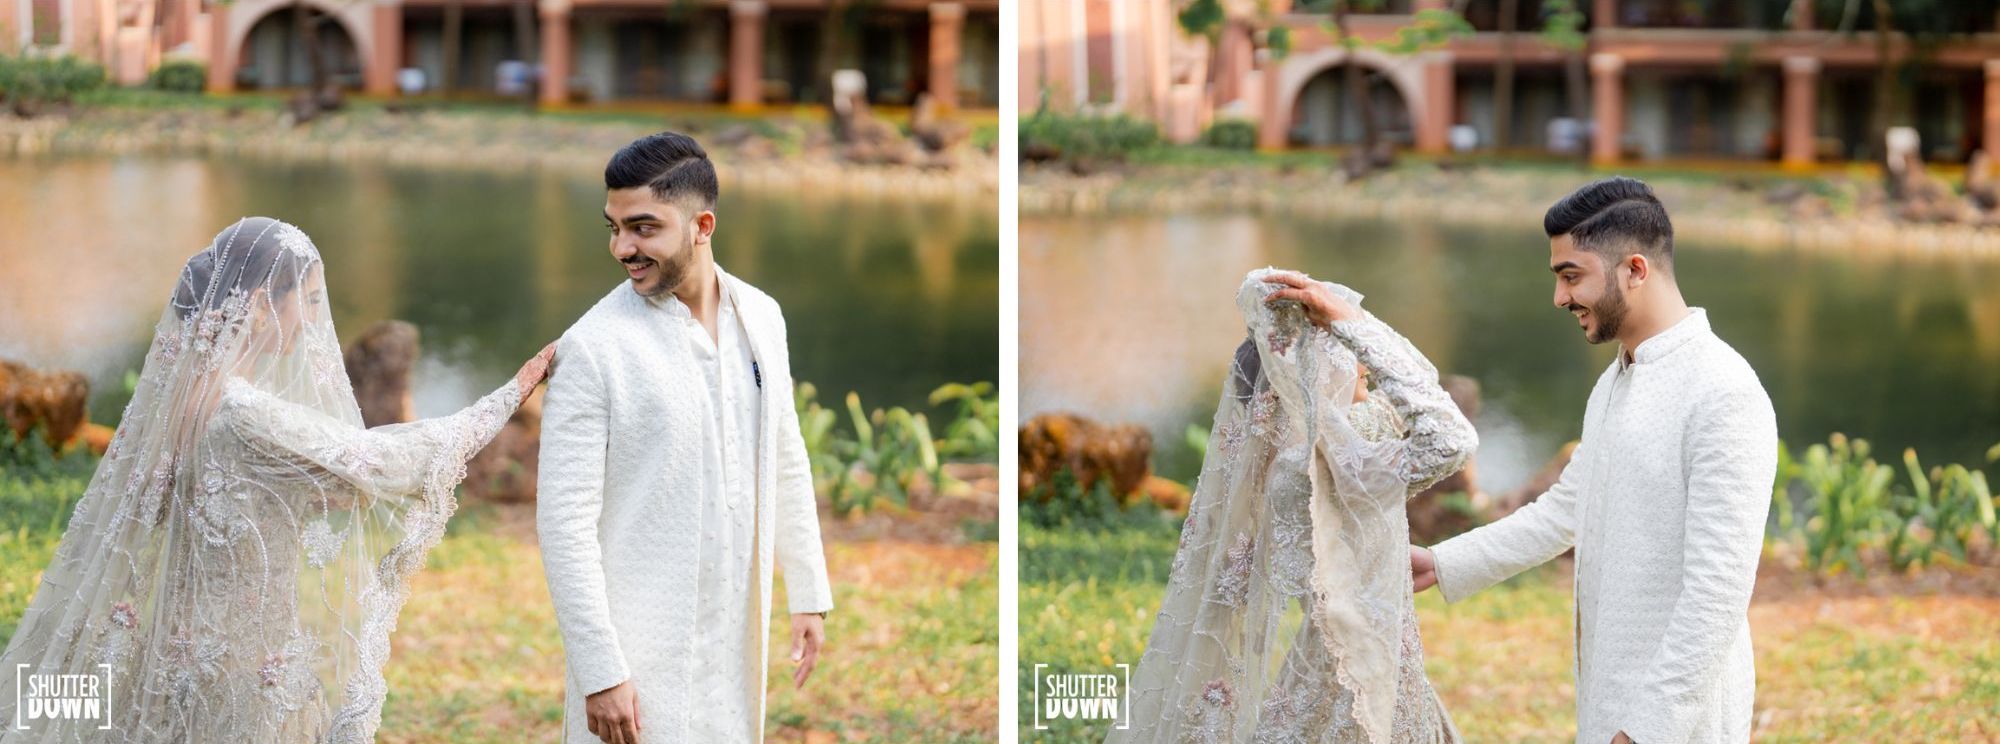 Arfa and Irfan's Pakistani Wedding — DC Wedding and portrait Photographer